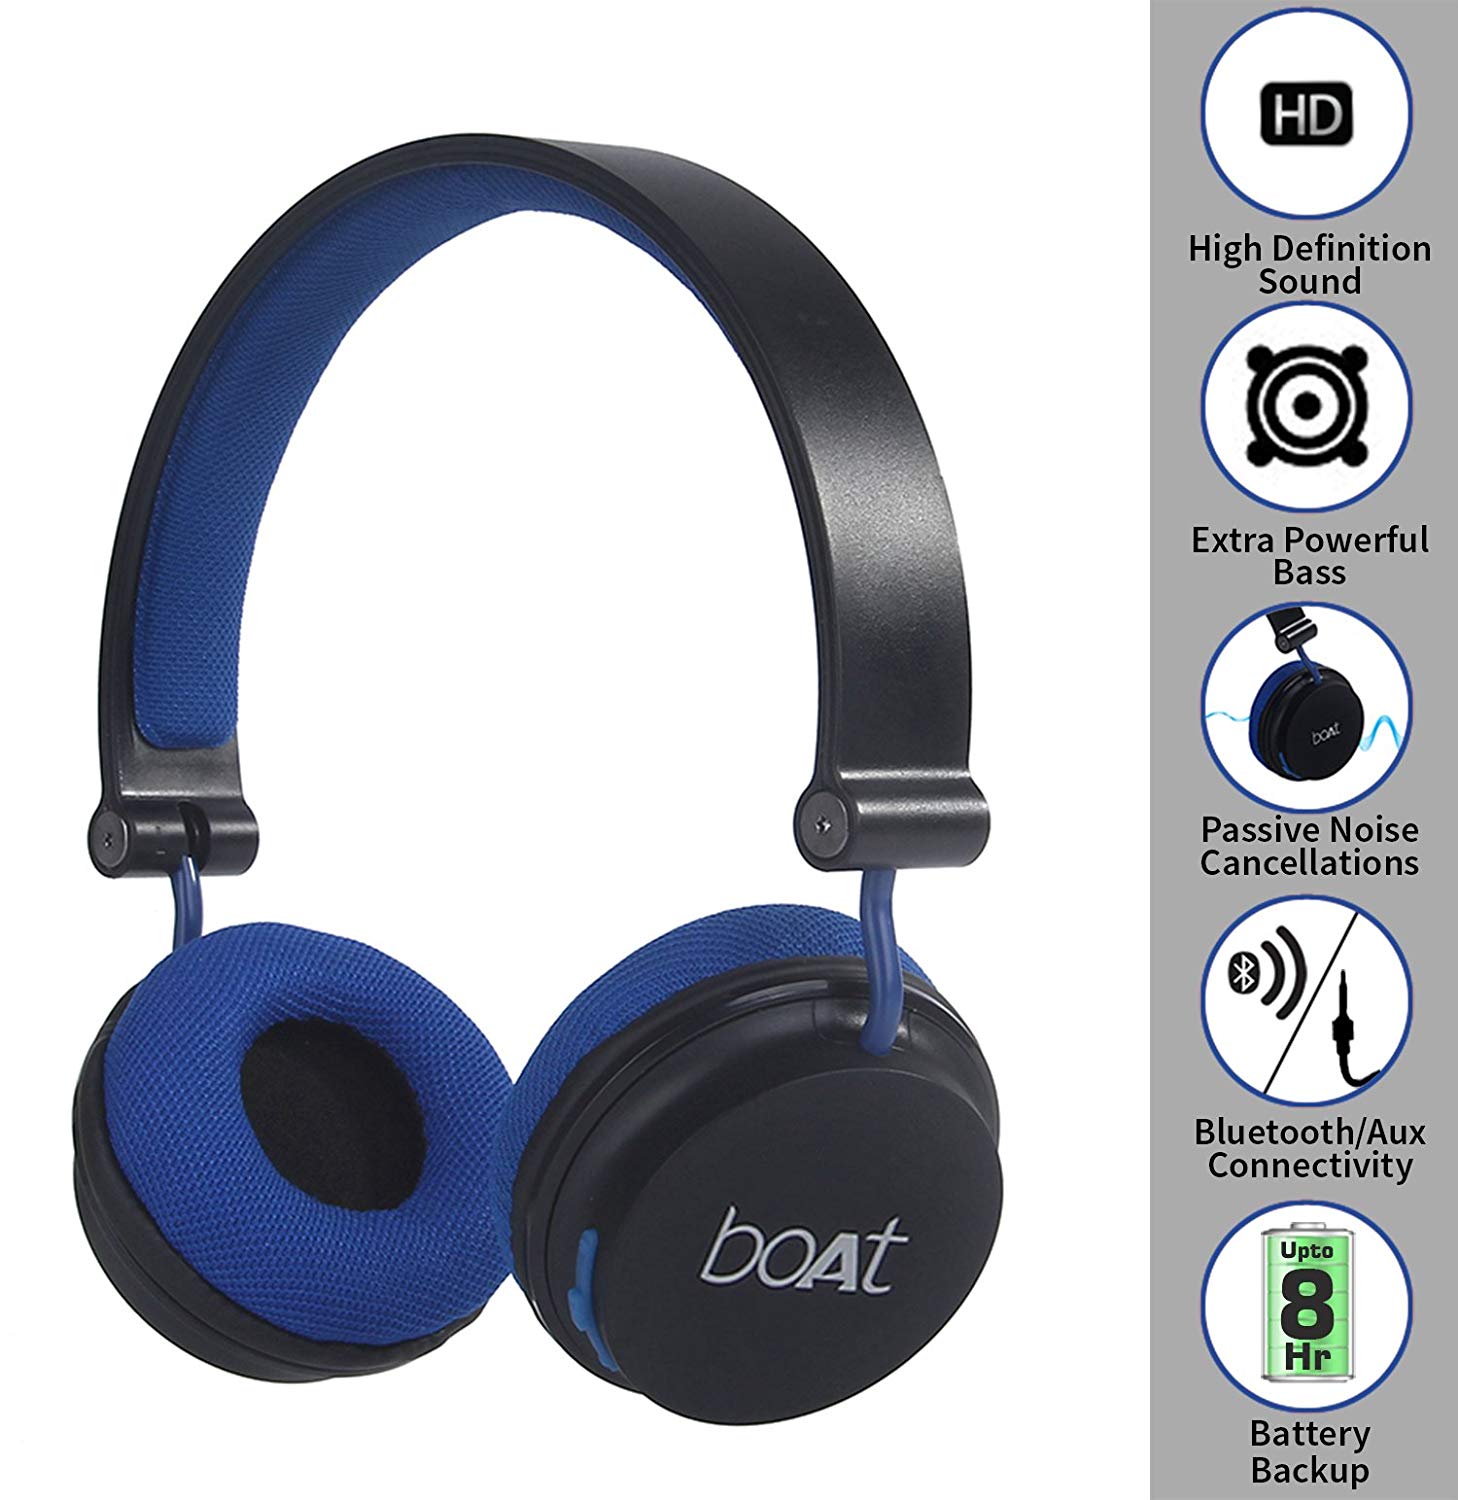 Boat Super Bass Rockerz 400 Bluetooth On-Ear Headphones with Mic (Black/Blue)